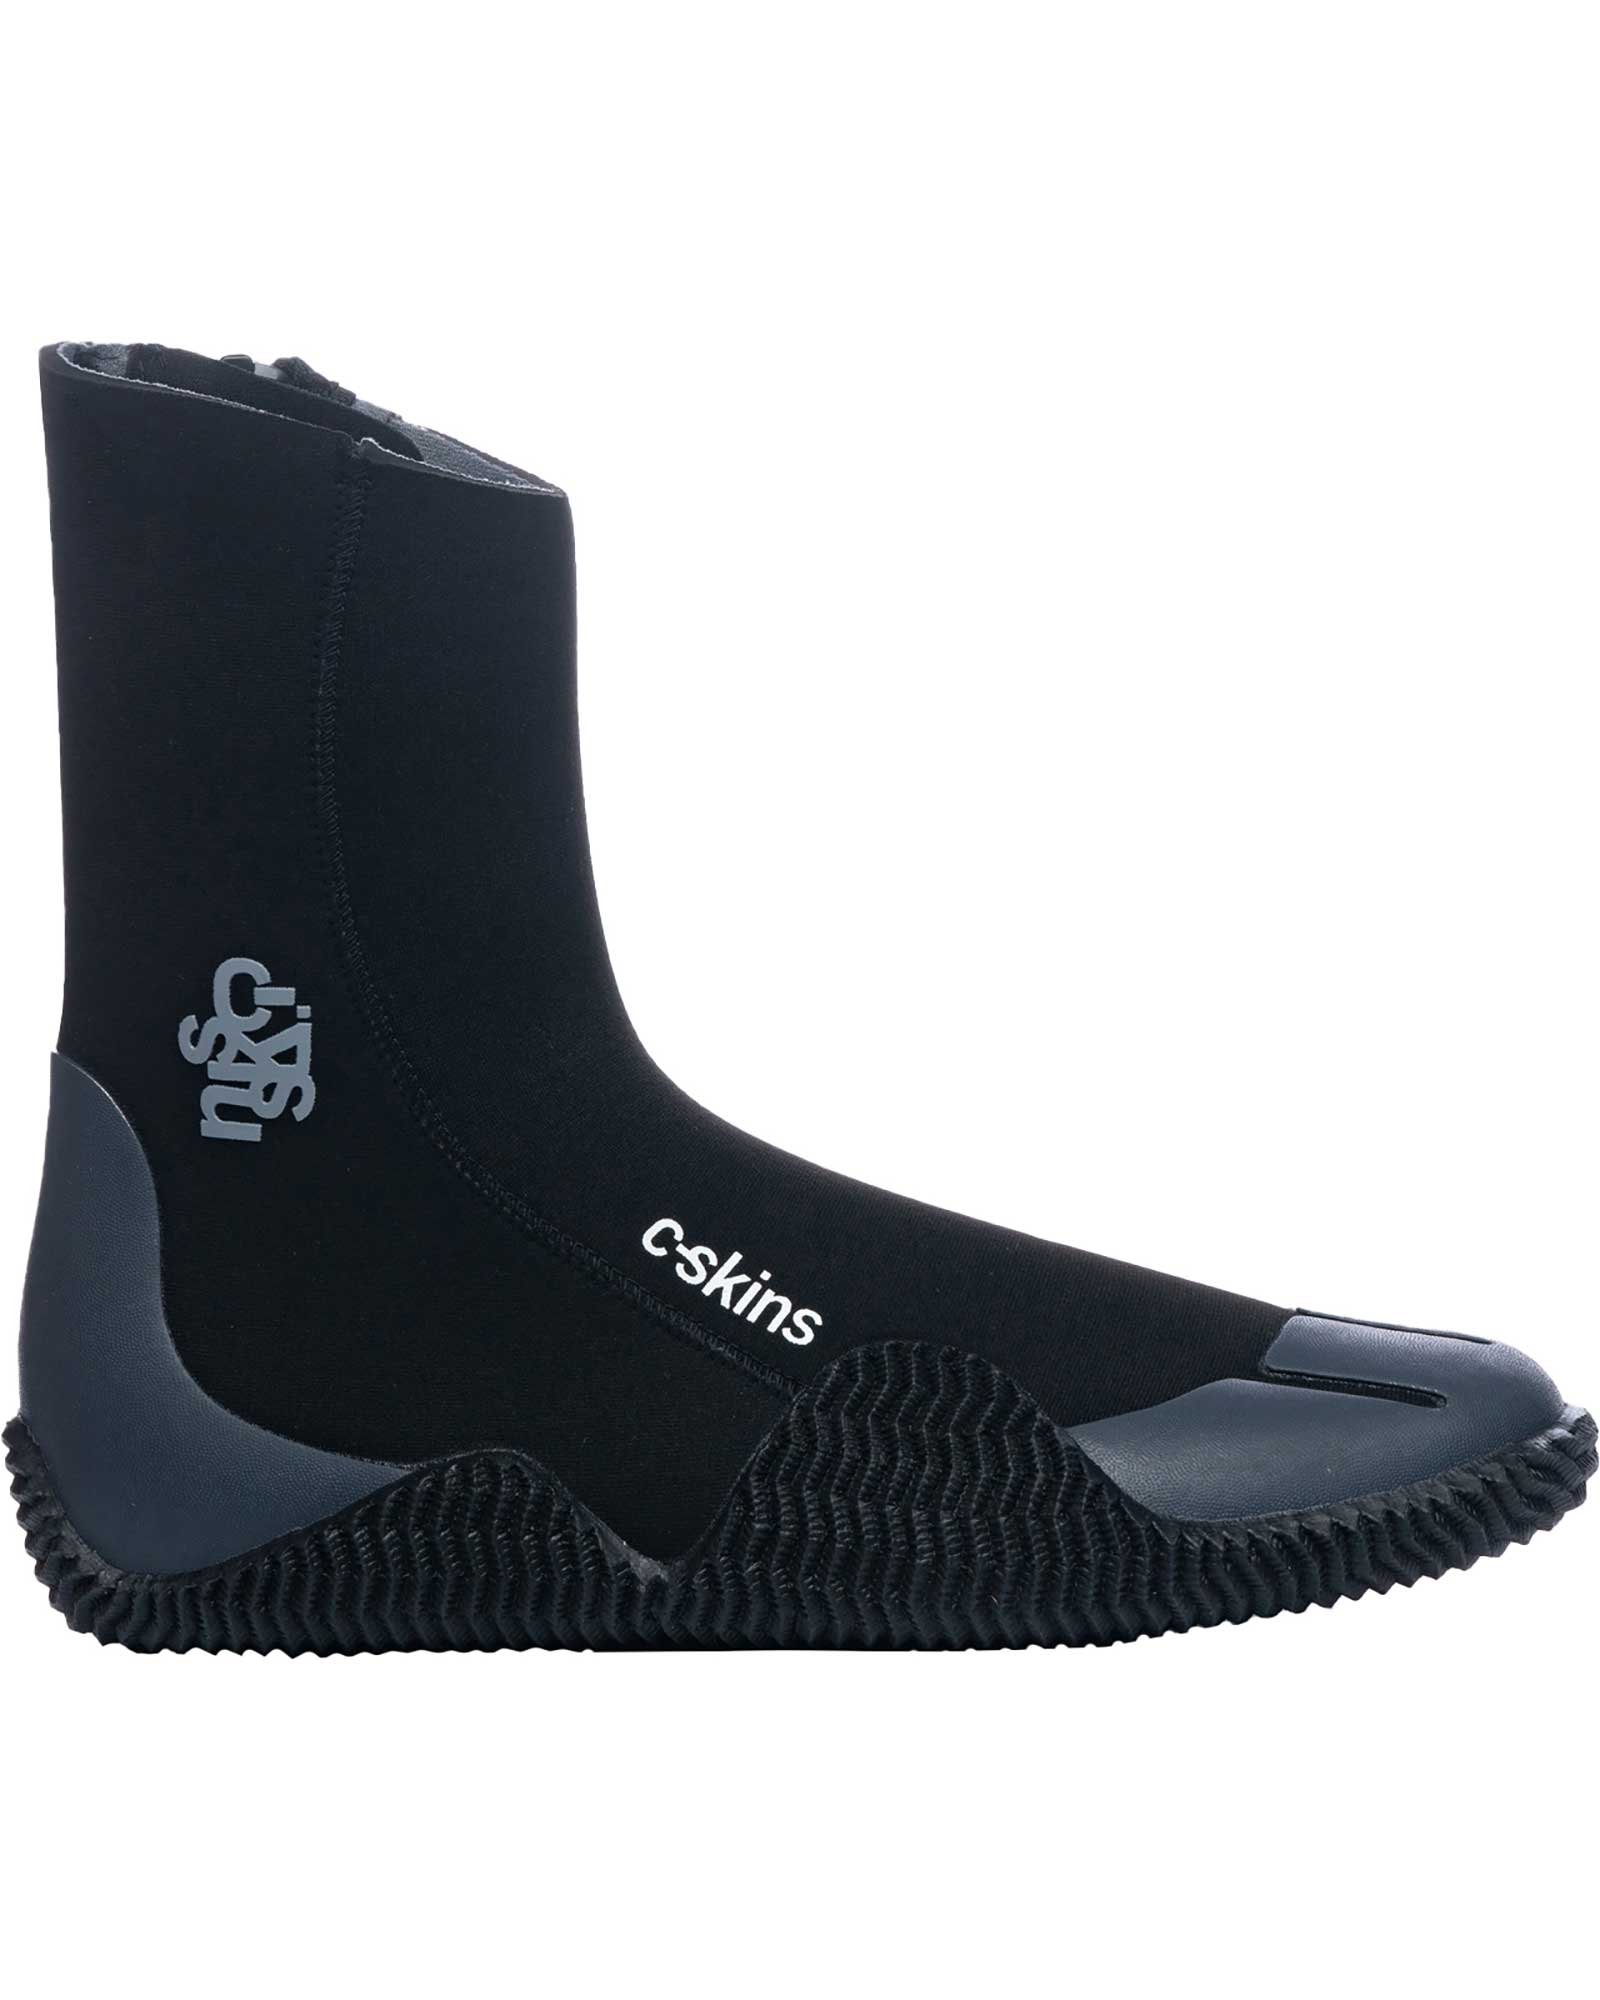 C-skins Legend 5mm Zipped Boots